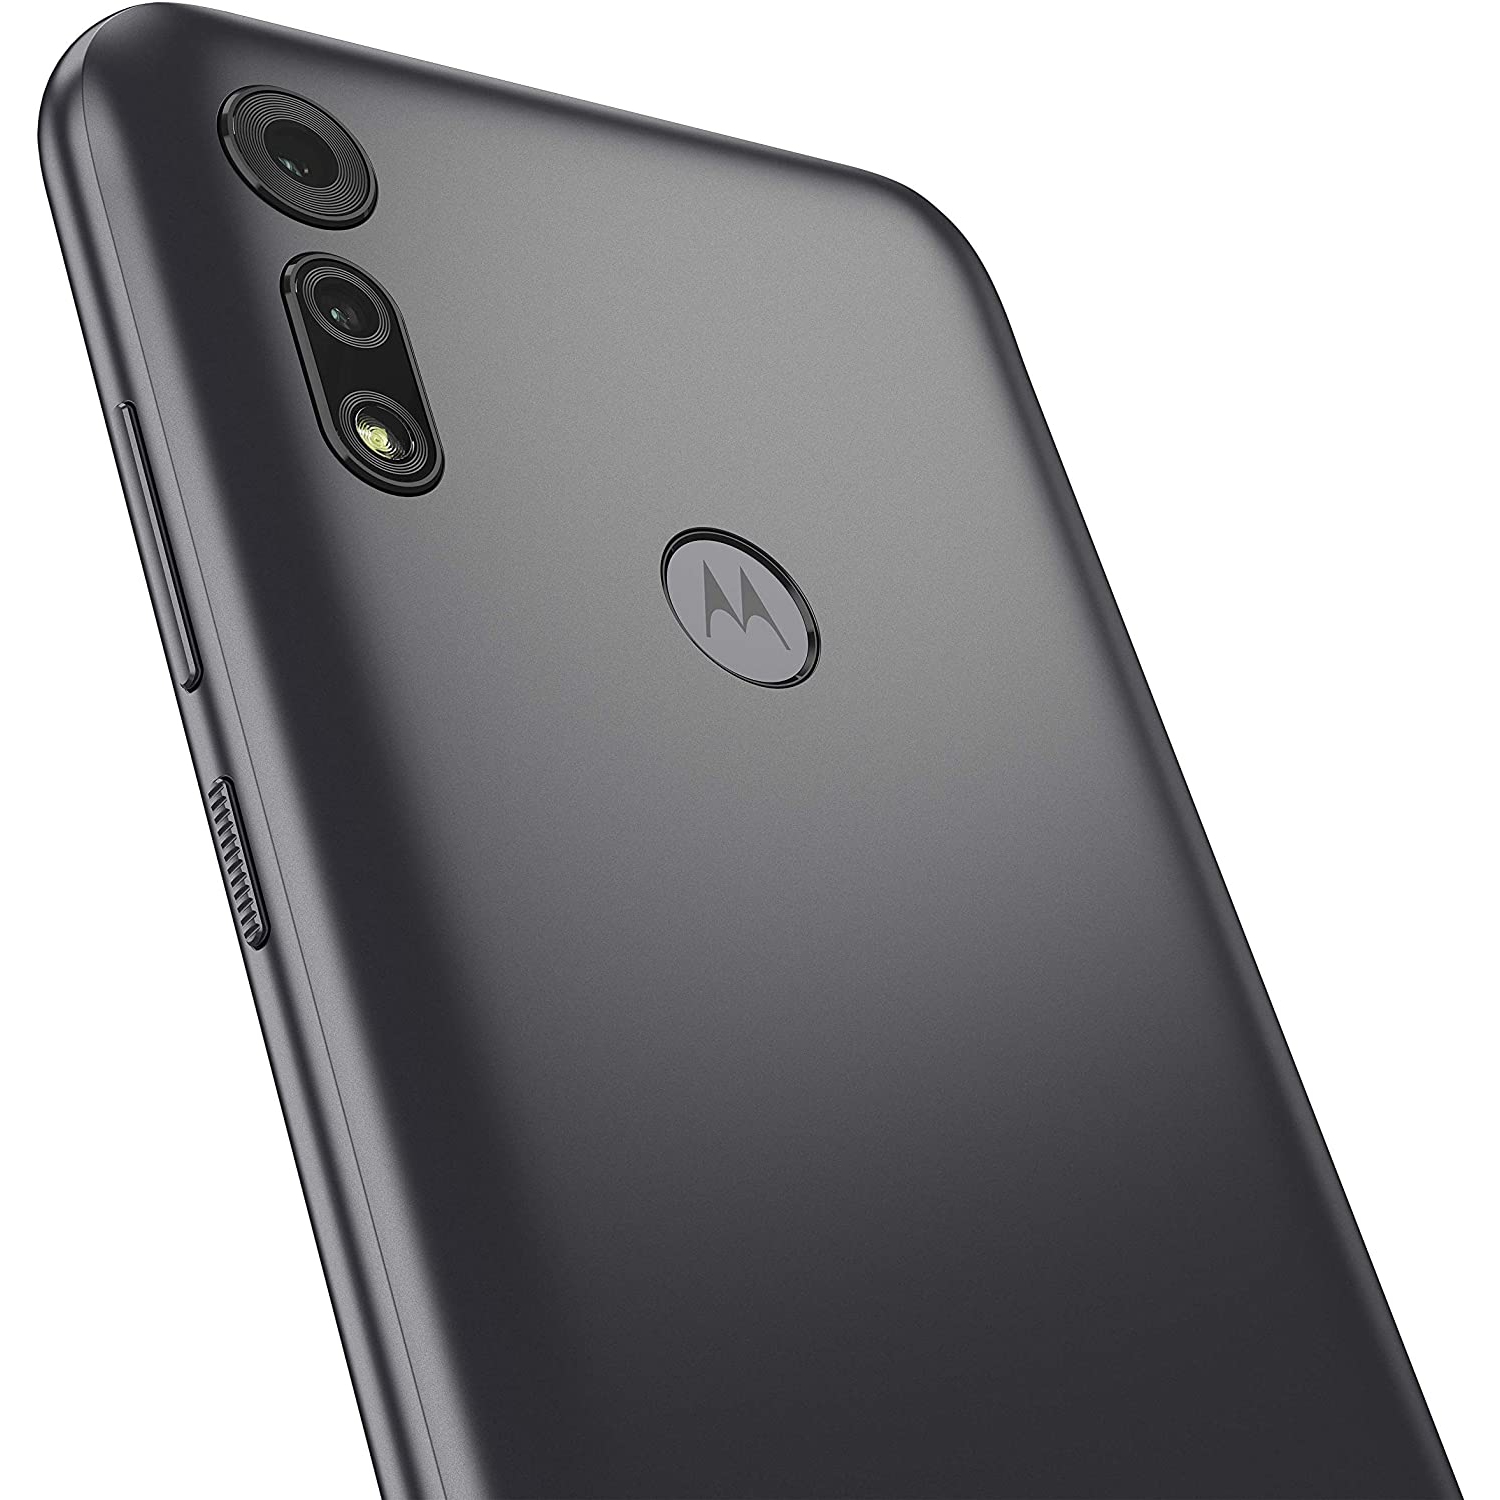 Motorola - Moto E6S - 4G LTE - 6.1 inch - Dual camera - 32 GB + 2 GB RAM - Factory Unlocked - Smartphone - Brand New - Sealed - Gray